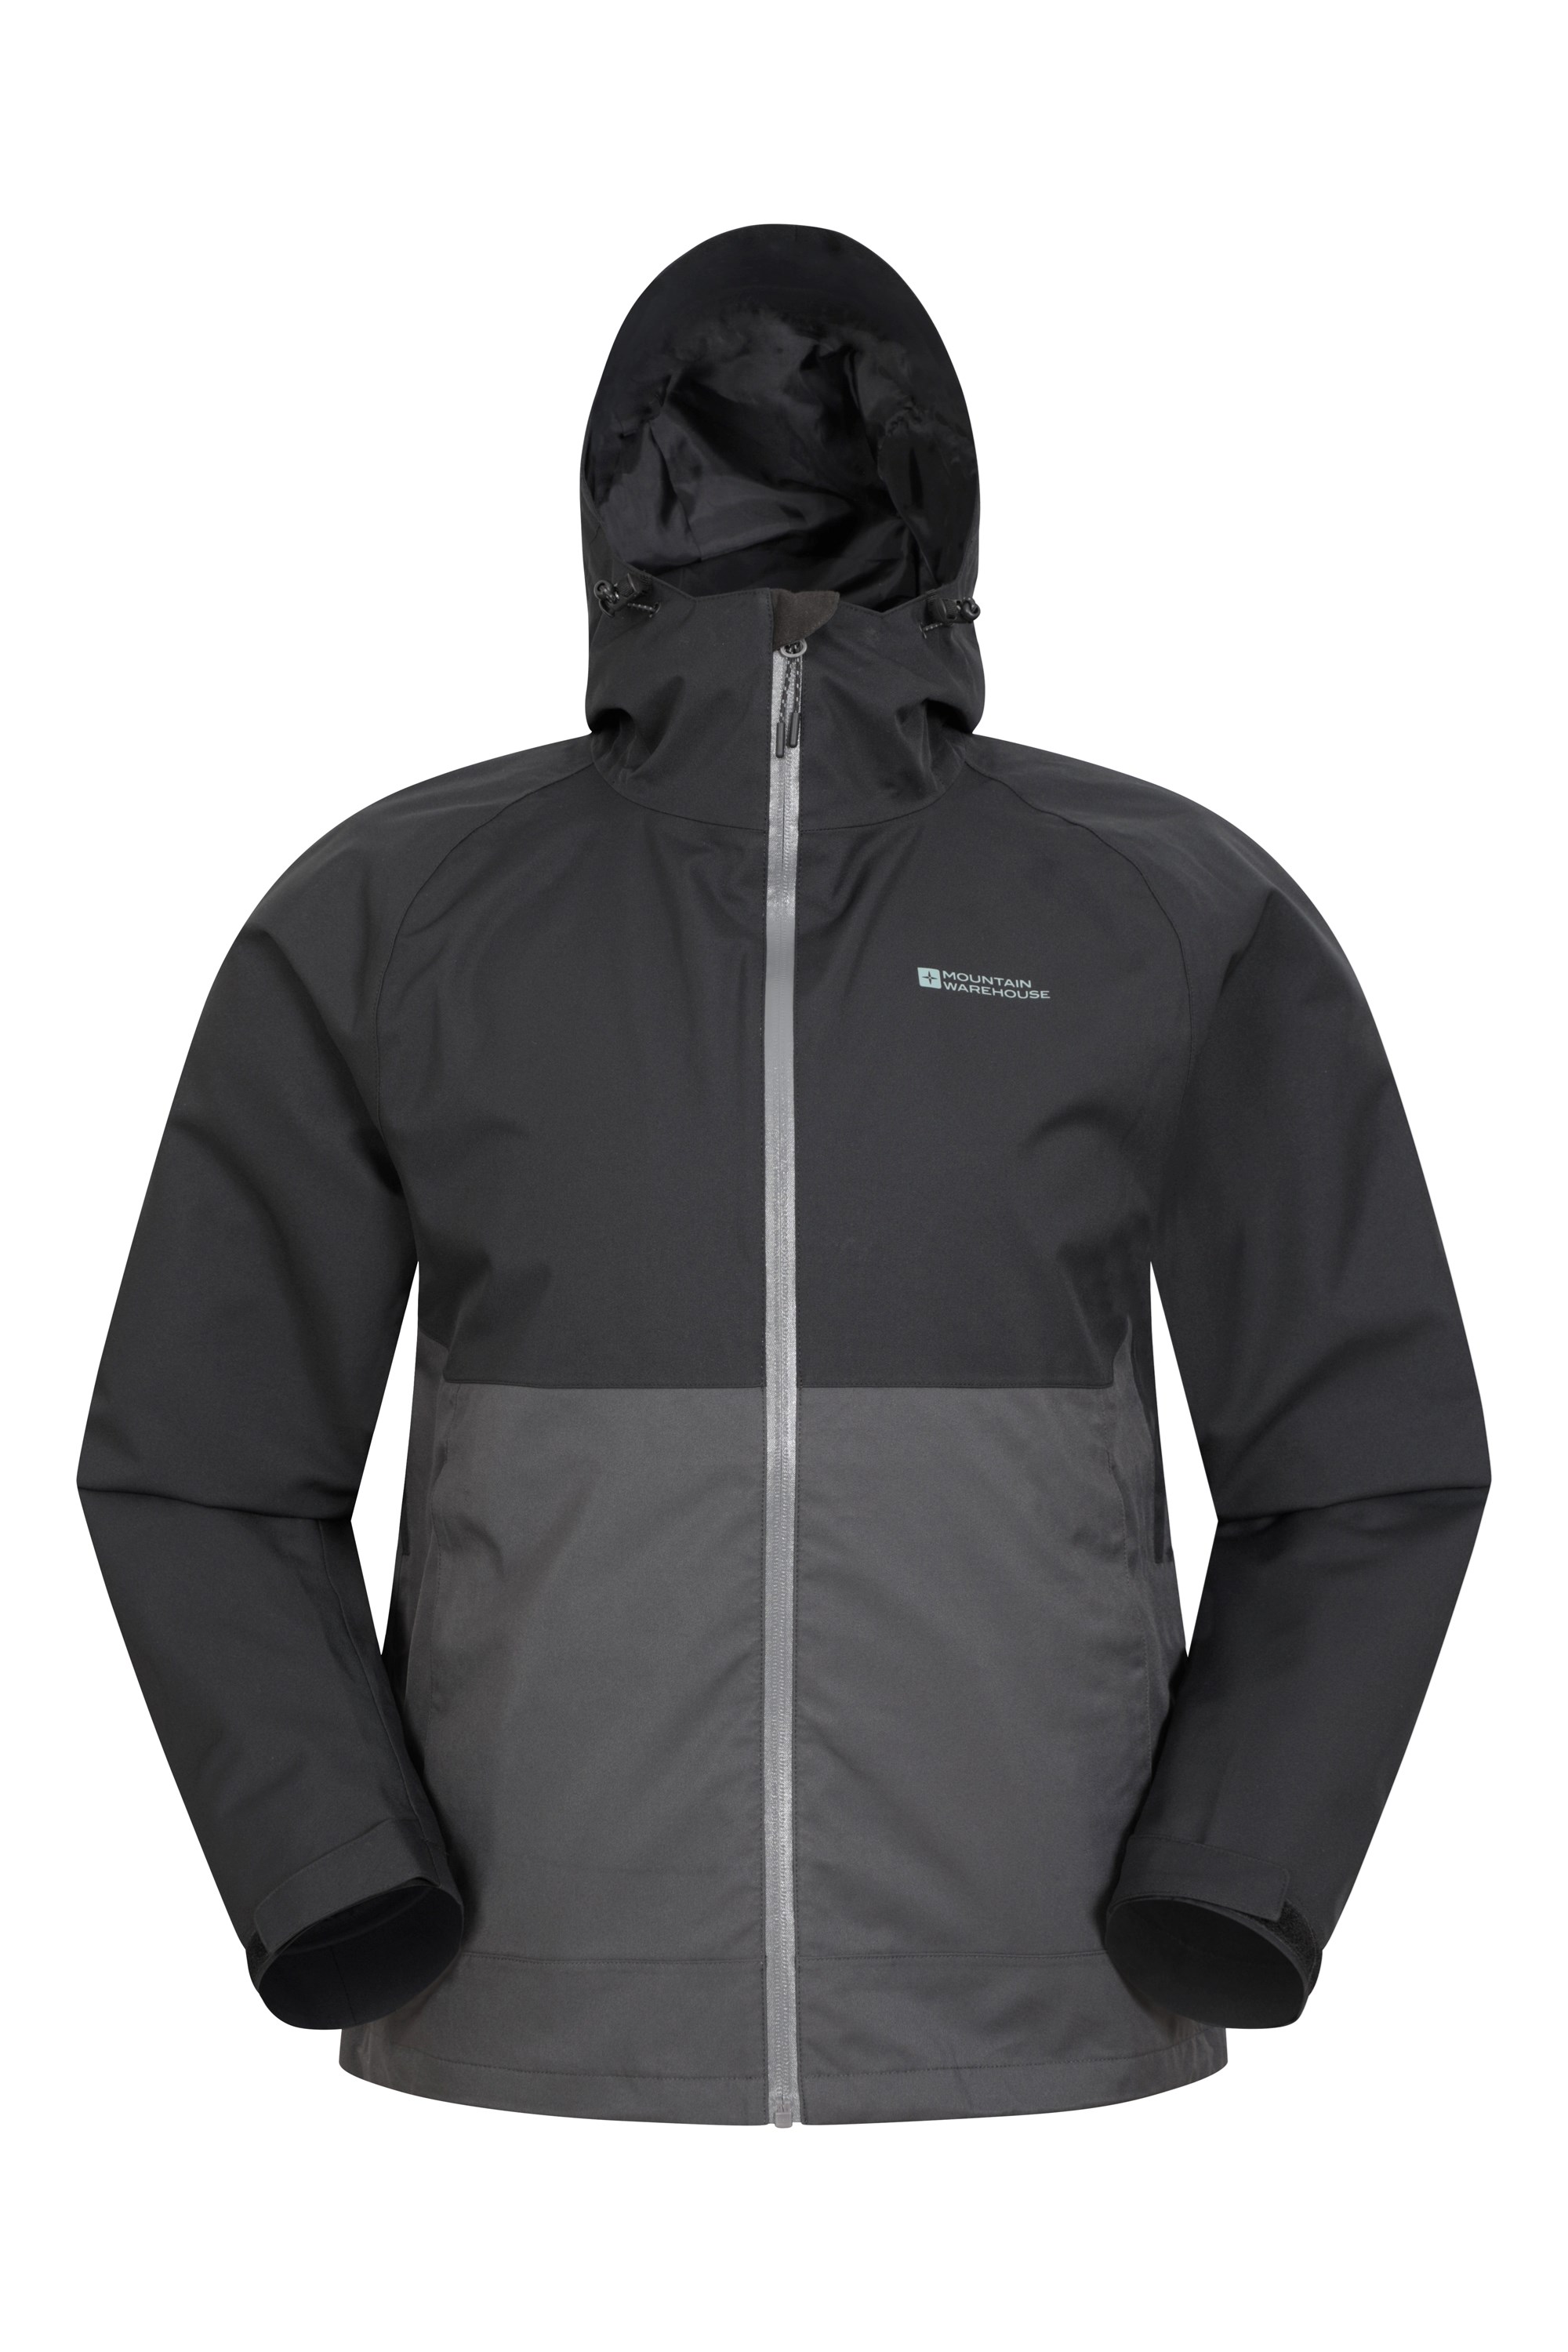 Verge Extreme Mens Waterproof Jacket | Mountain Warehouse GB